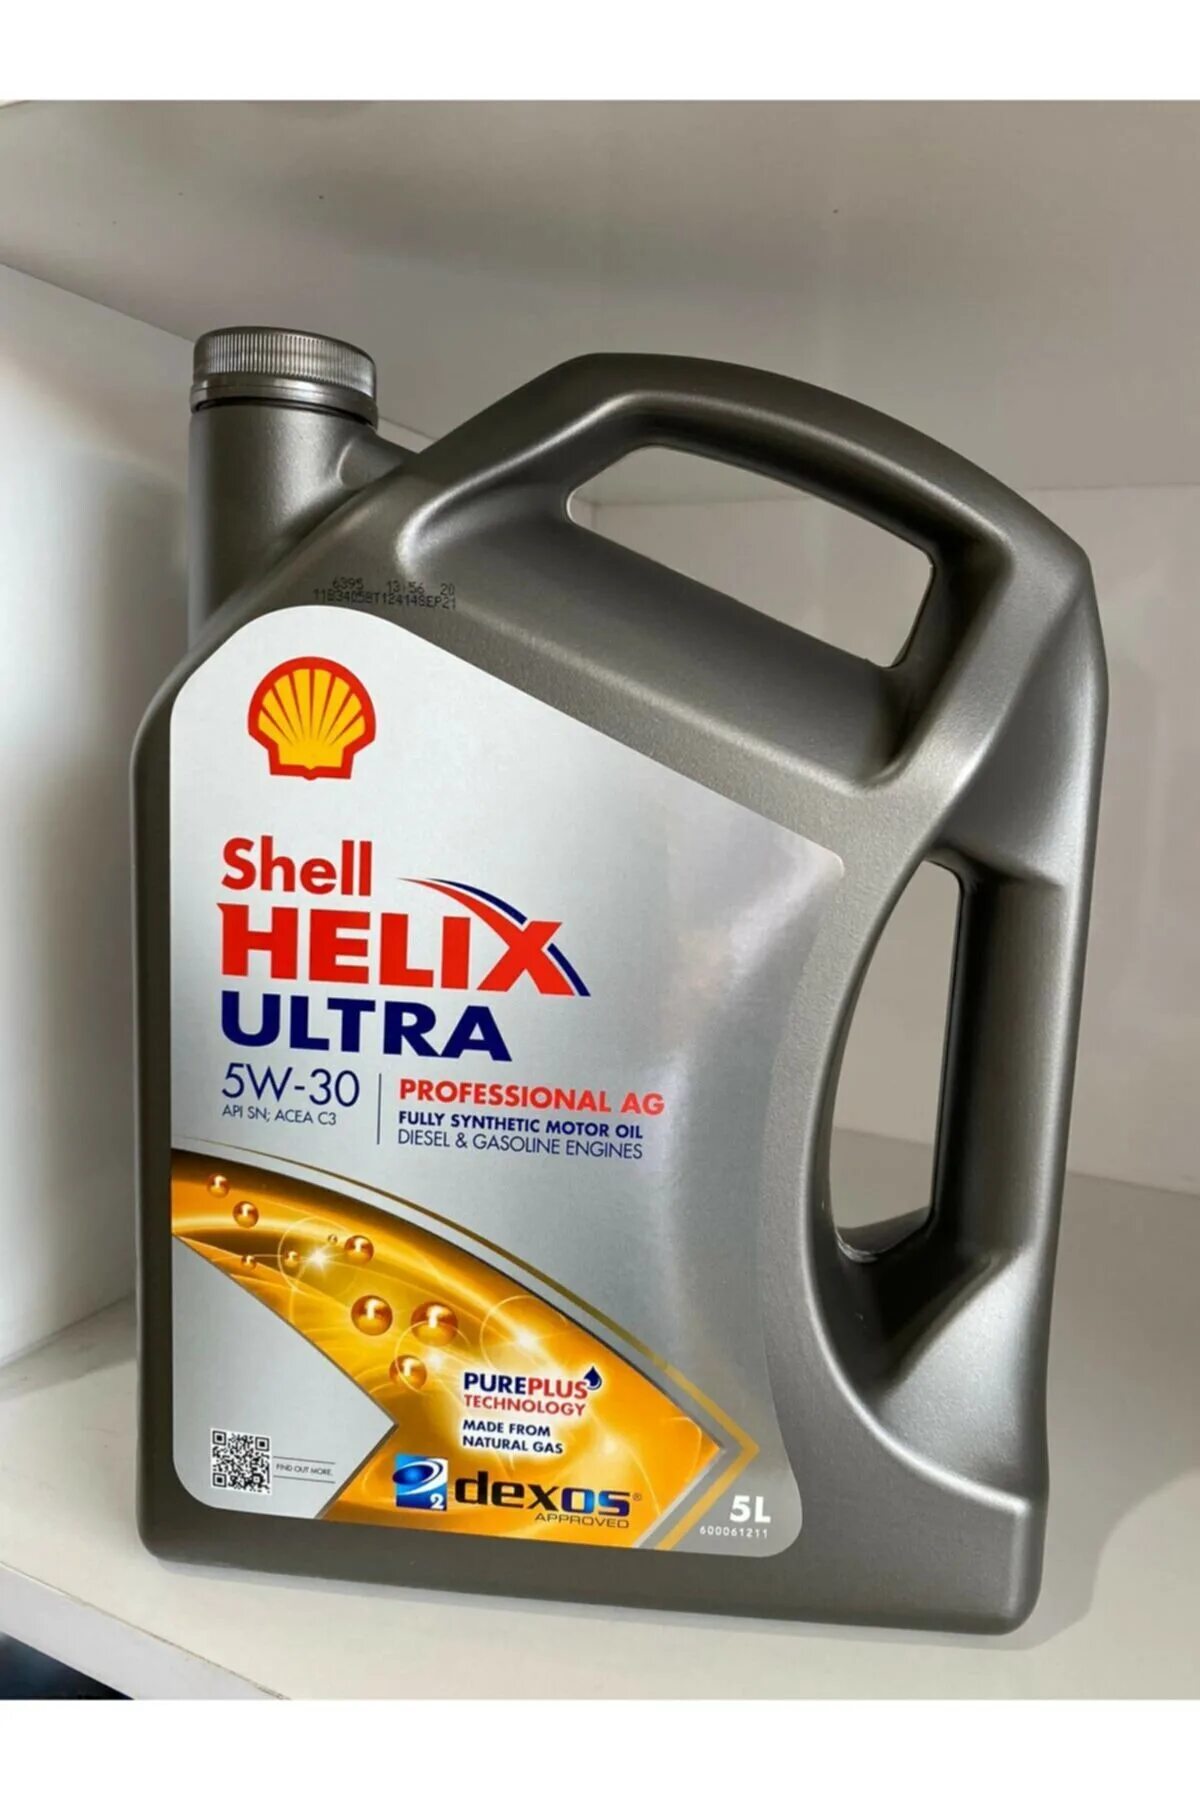 Shell ultra 5w 30 купить. Shell Ultra 5w30. Shell Helix Ultra 5w30. Shell Helix Ultra professional AG 5w-30. Shell 5/30.